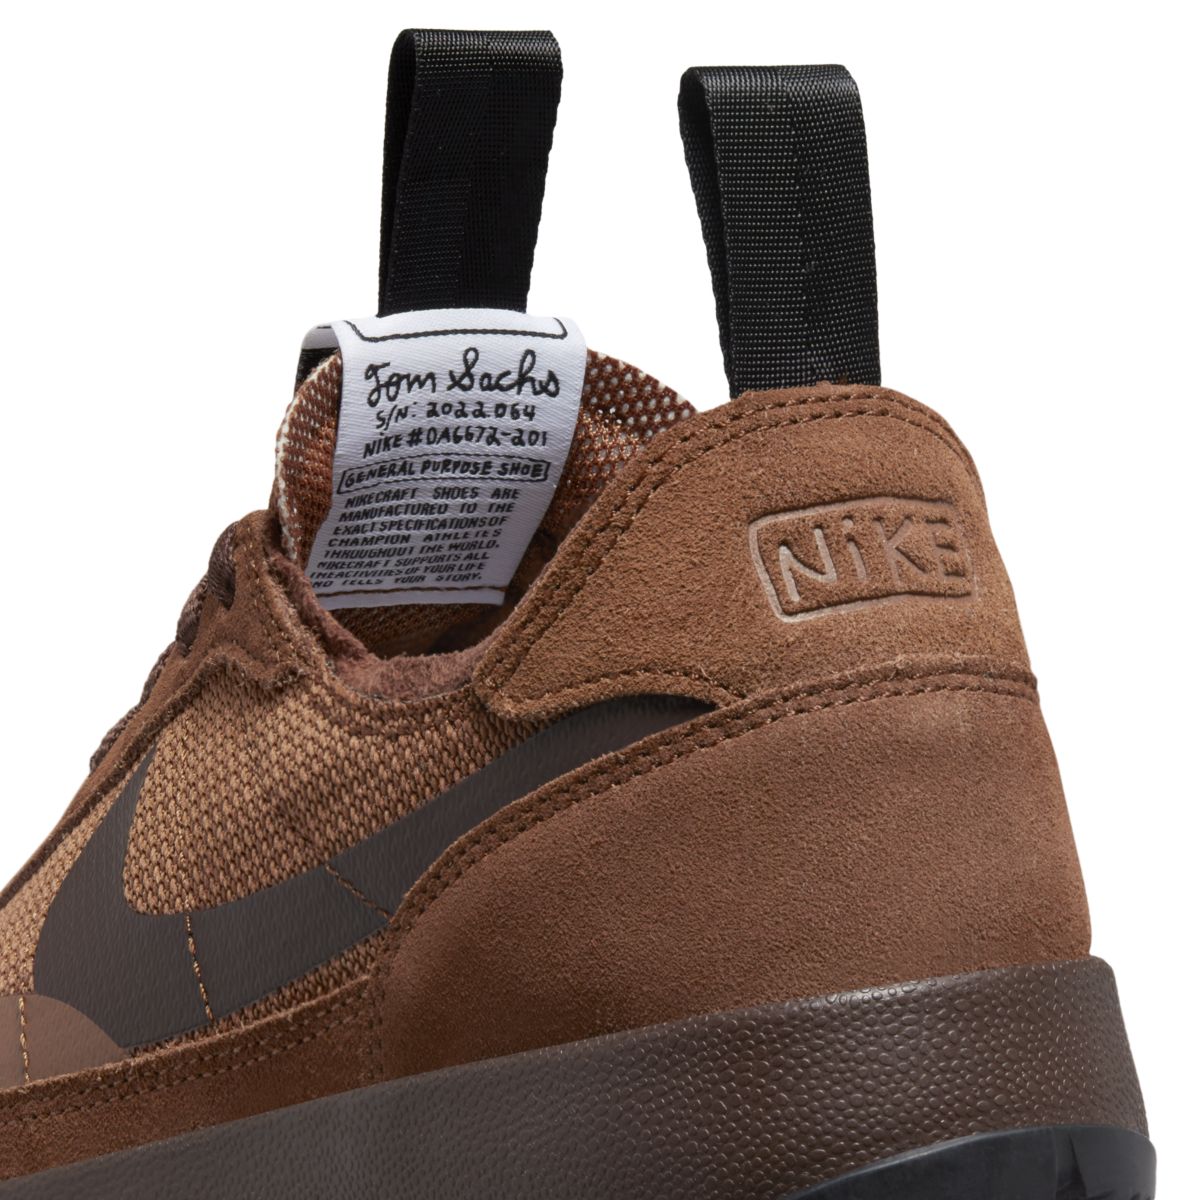 Tom Sachs x NikeCraft General Purpose Shoe Brown DA6672-201 9